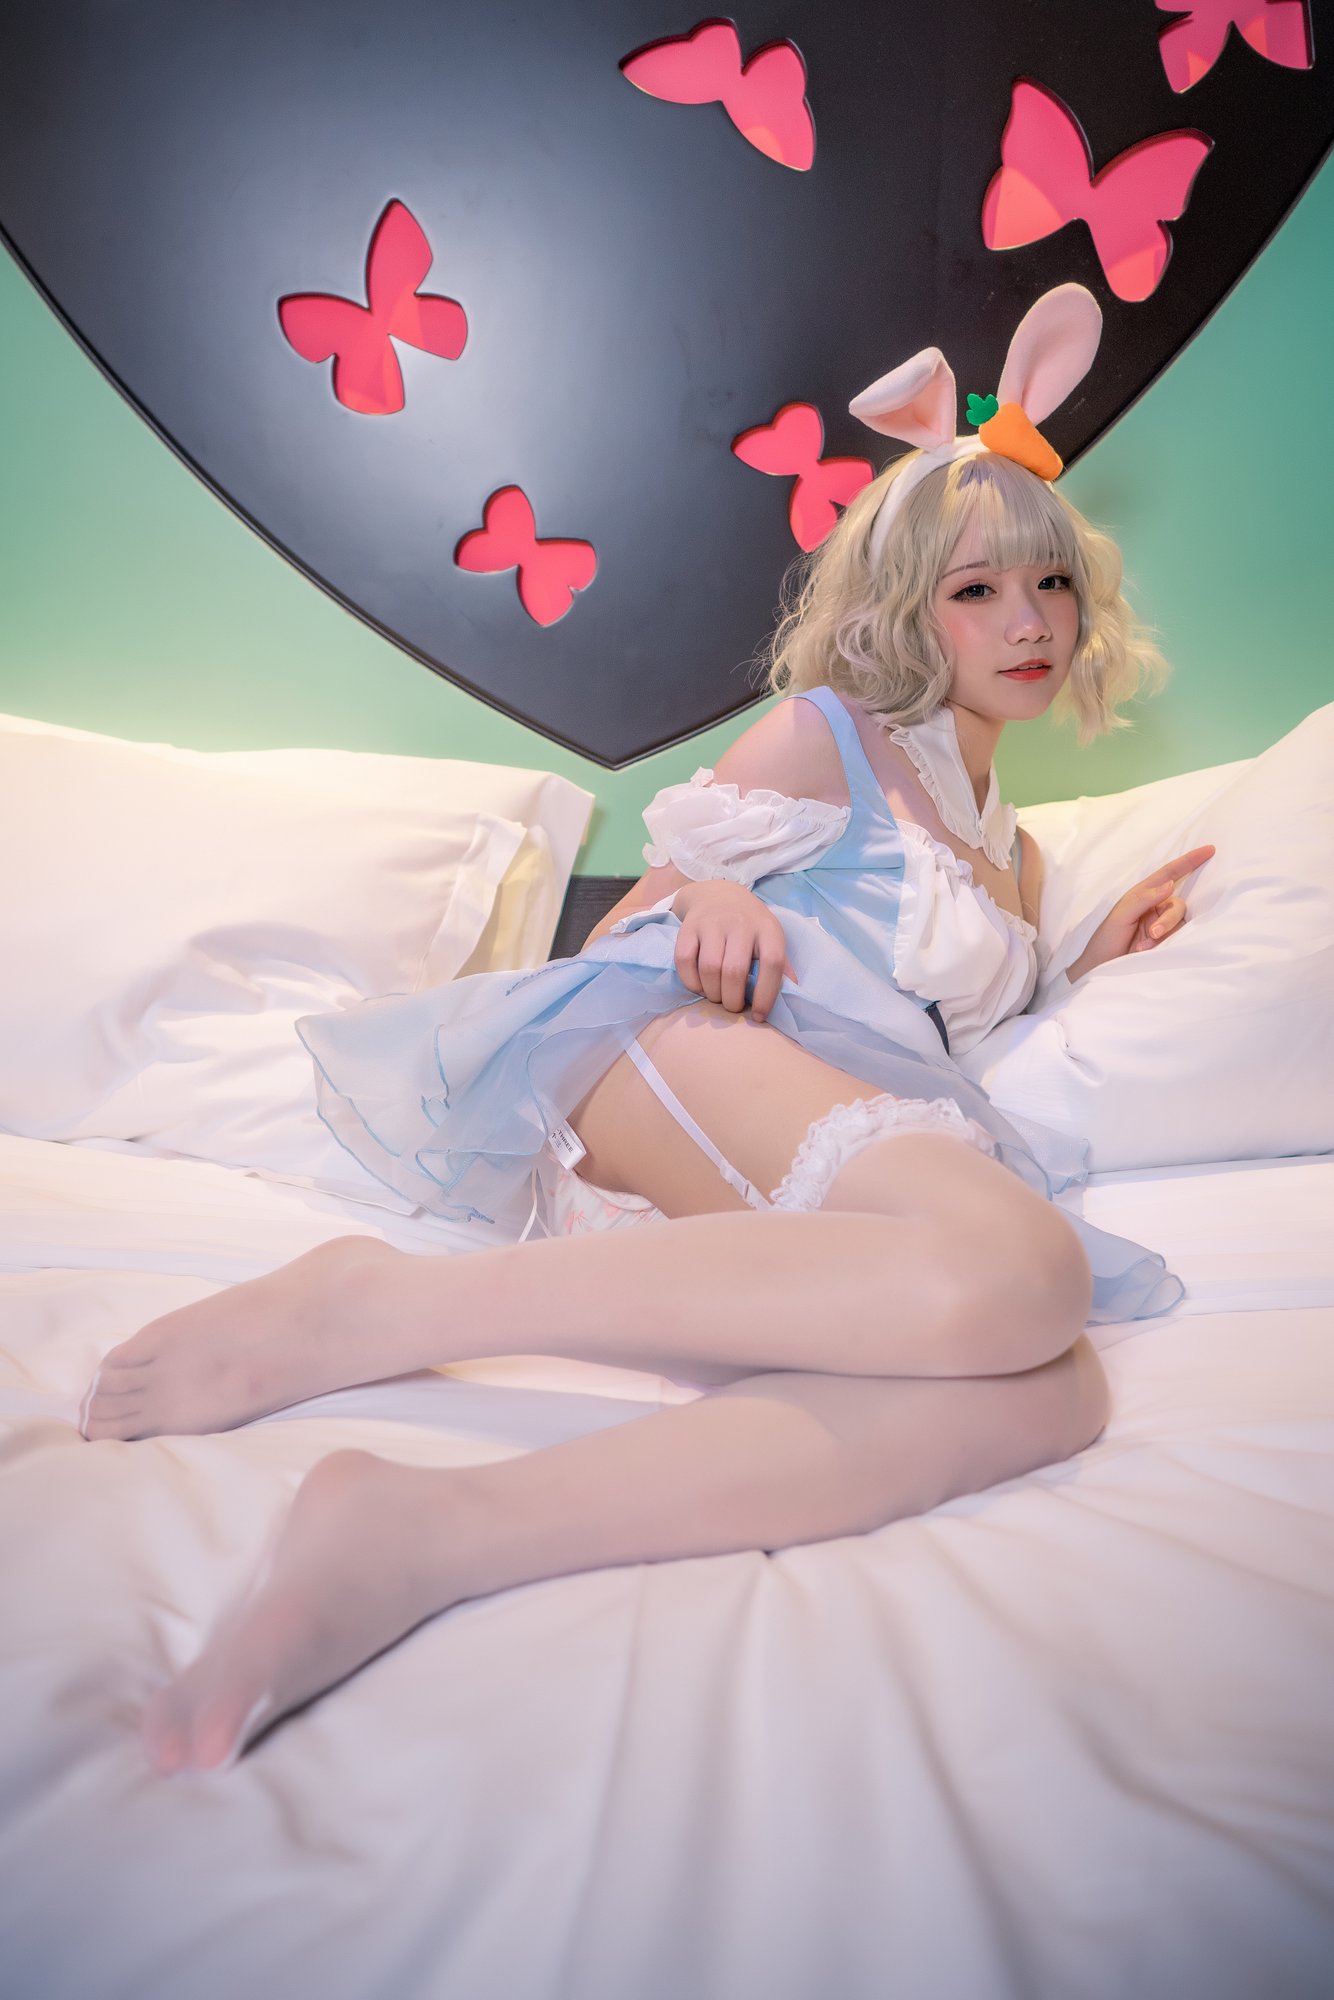 王胖胖u - NO.006 Alice the maid